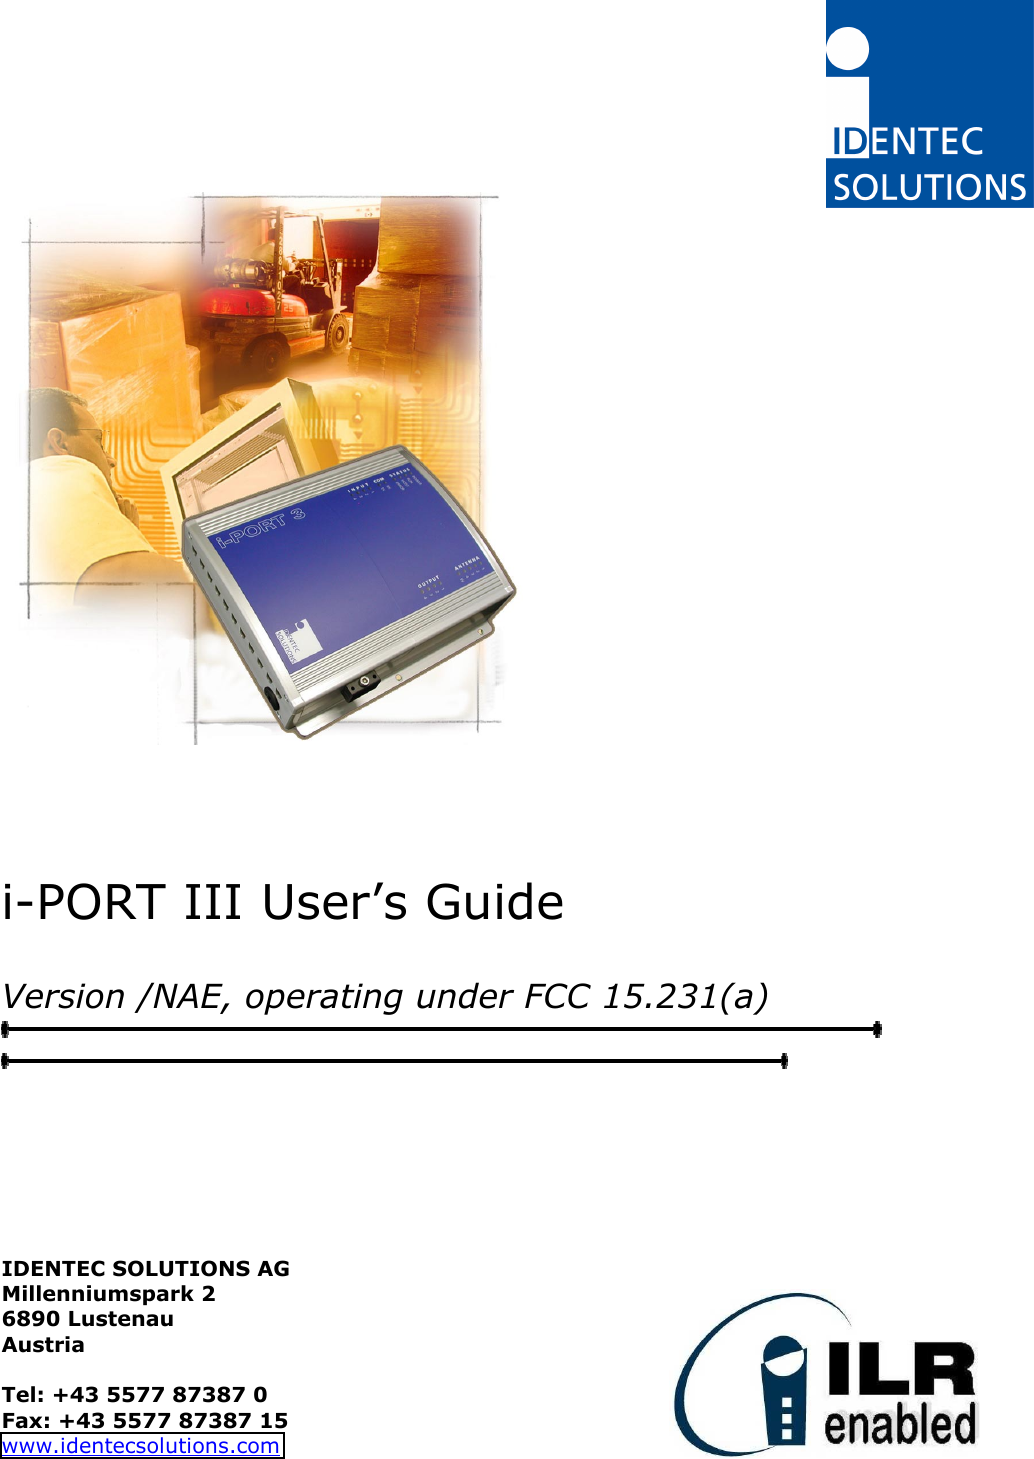             i-PORT III User’s Guide  Version /NAE, operating under FCC 15.231(a)        IDENTEC SOLUTIONS AG  Millenniumspark 2 6890 Lustenau Austria  Tel: +43 5577 87387 0 Fax: +43 5577 87387 15 www.identecsolutions.com  